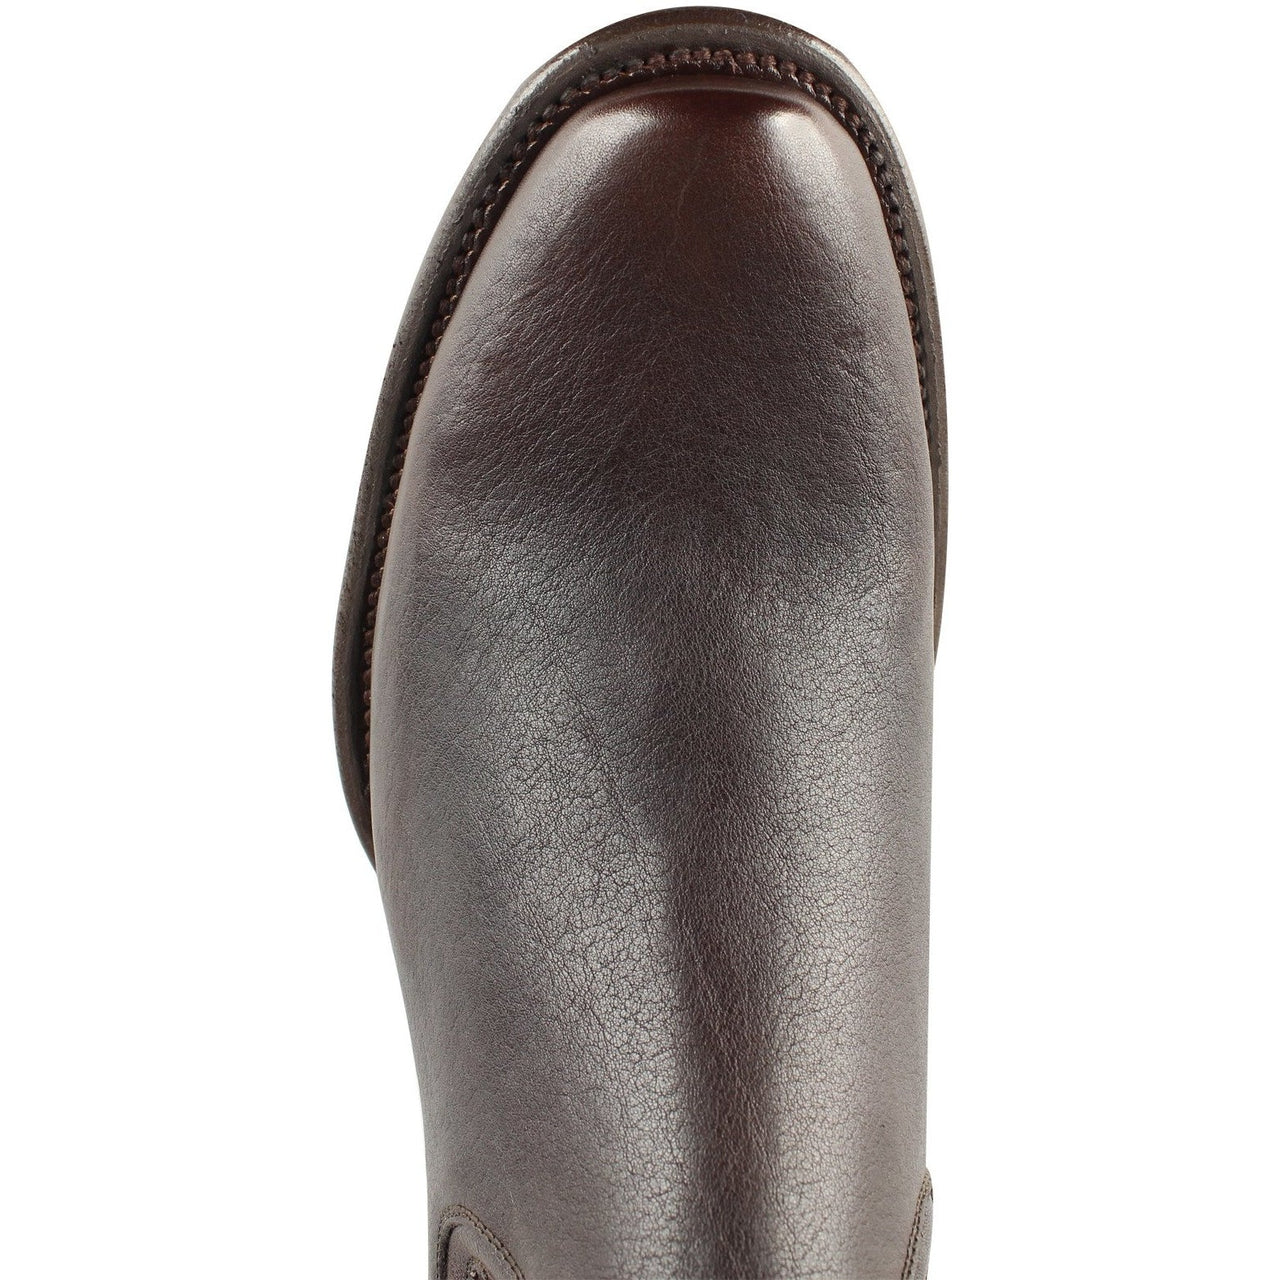 Men's Duque Di Galliano Boots Dubai Toe Handcrafted Brown - yeehawcowboy